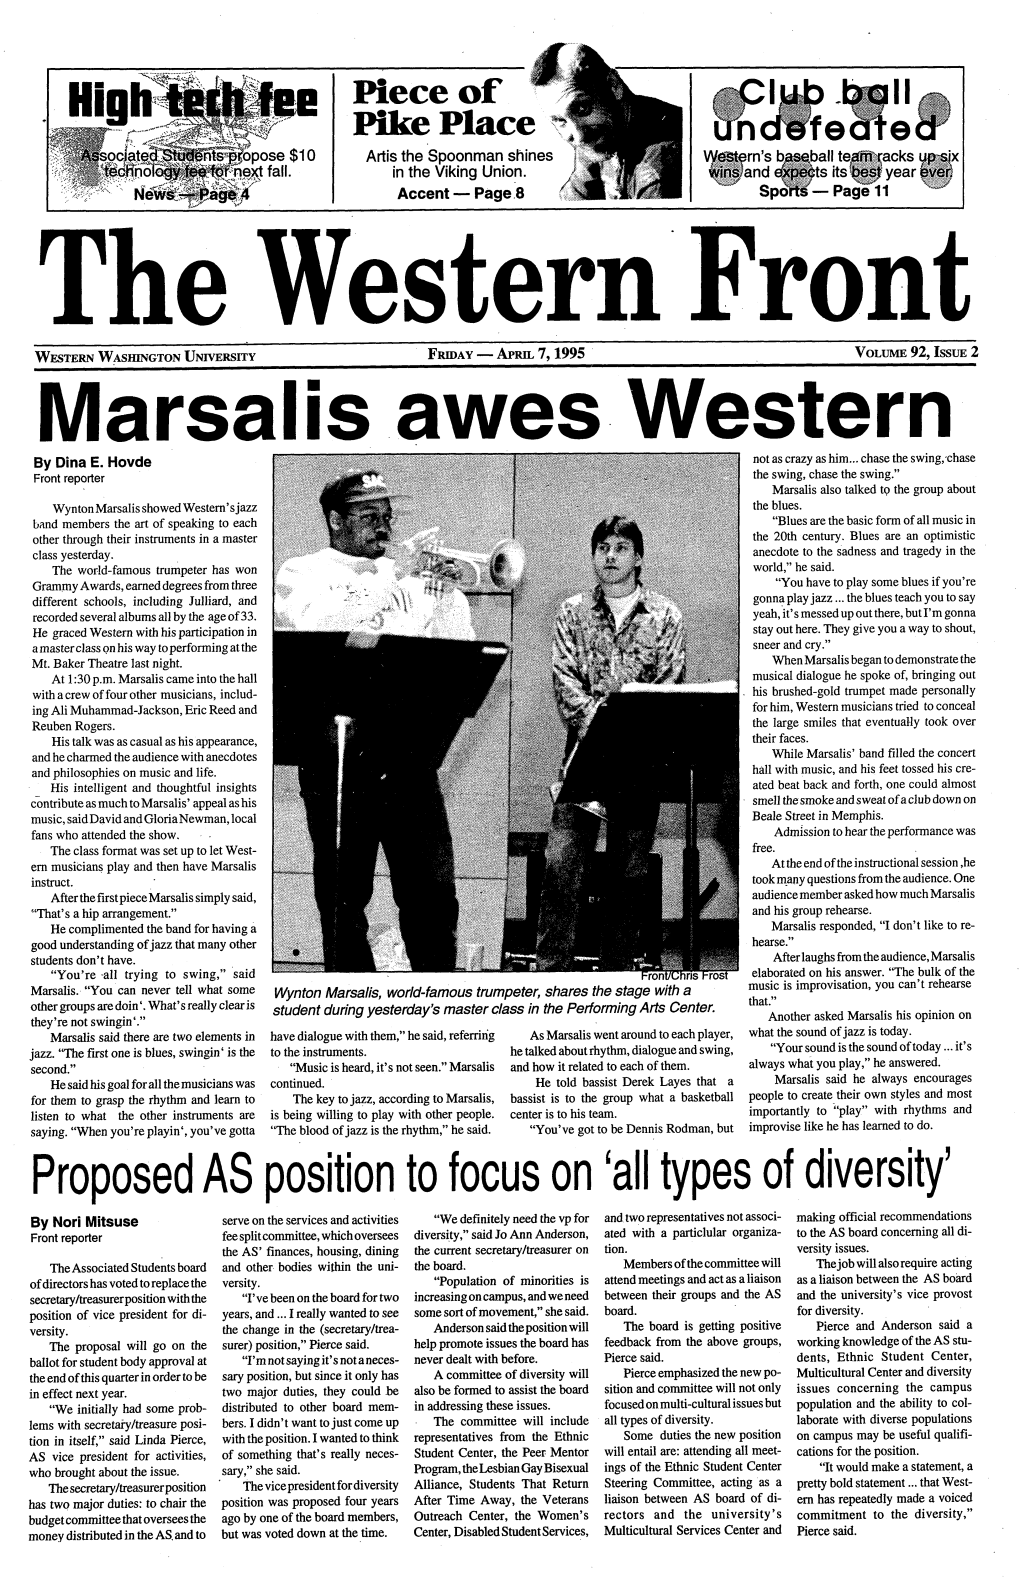 Marsalis Awes Western by Dina E